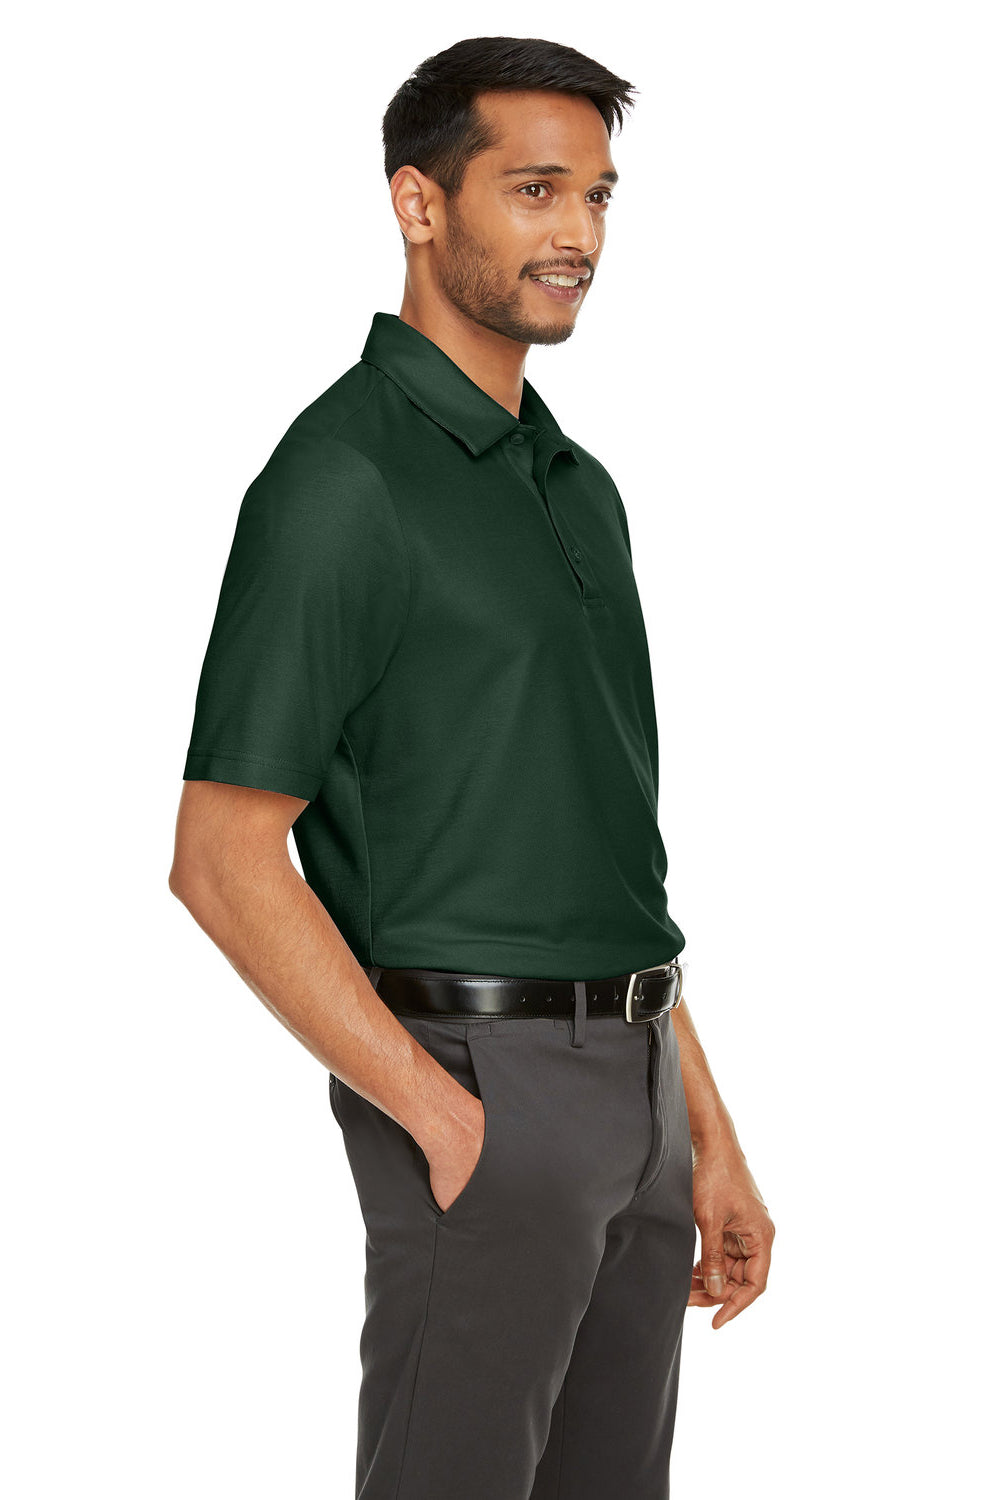 Core 365 CE112 Mens Fusion ChromaSoft Performance Moisture Wicking Short Sleeve Polo Shirt Forest Green 3Q